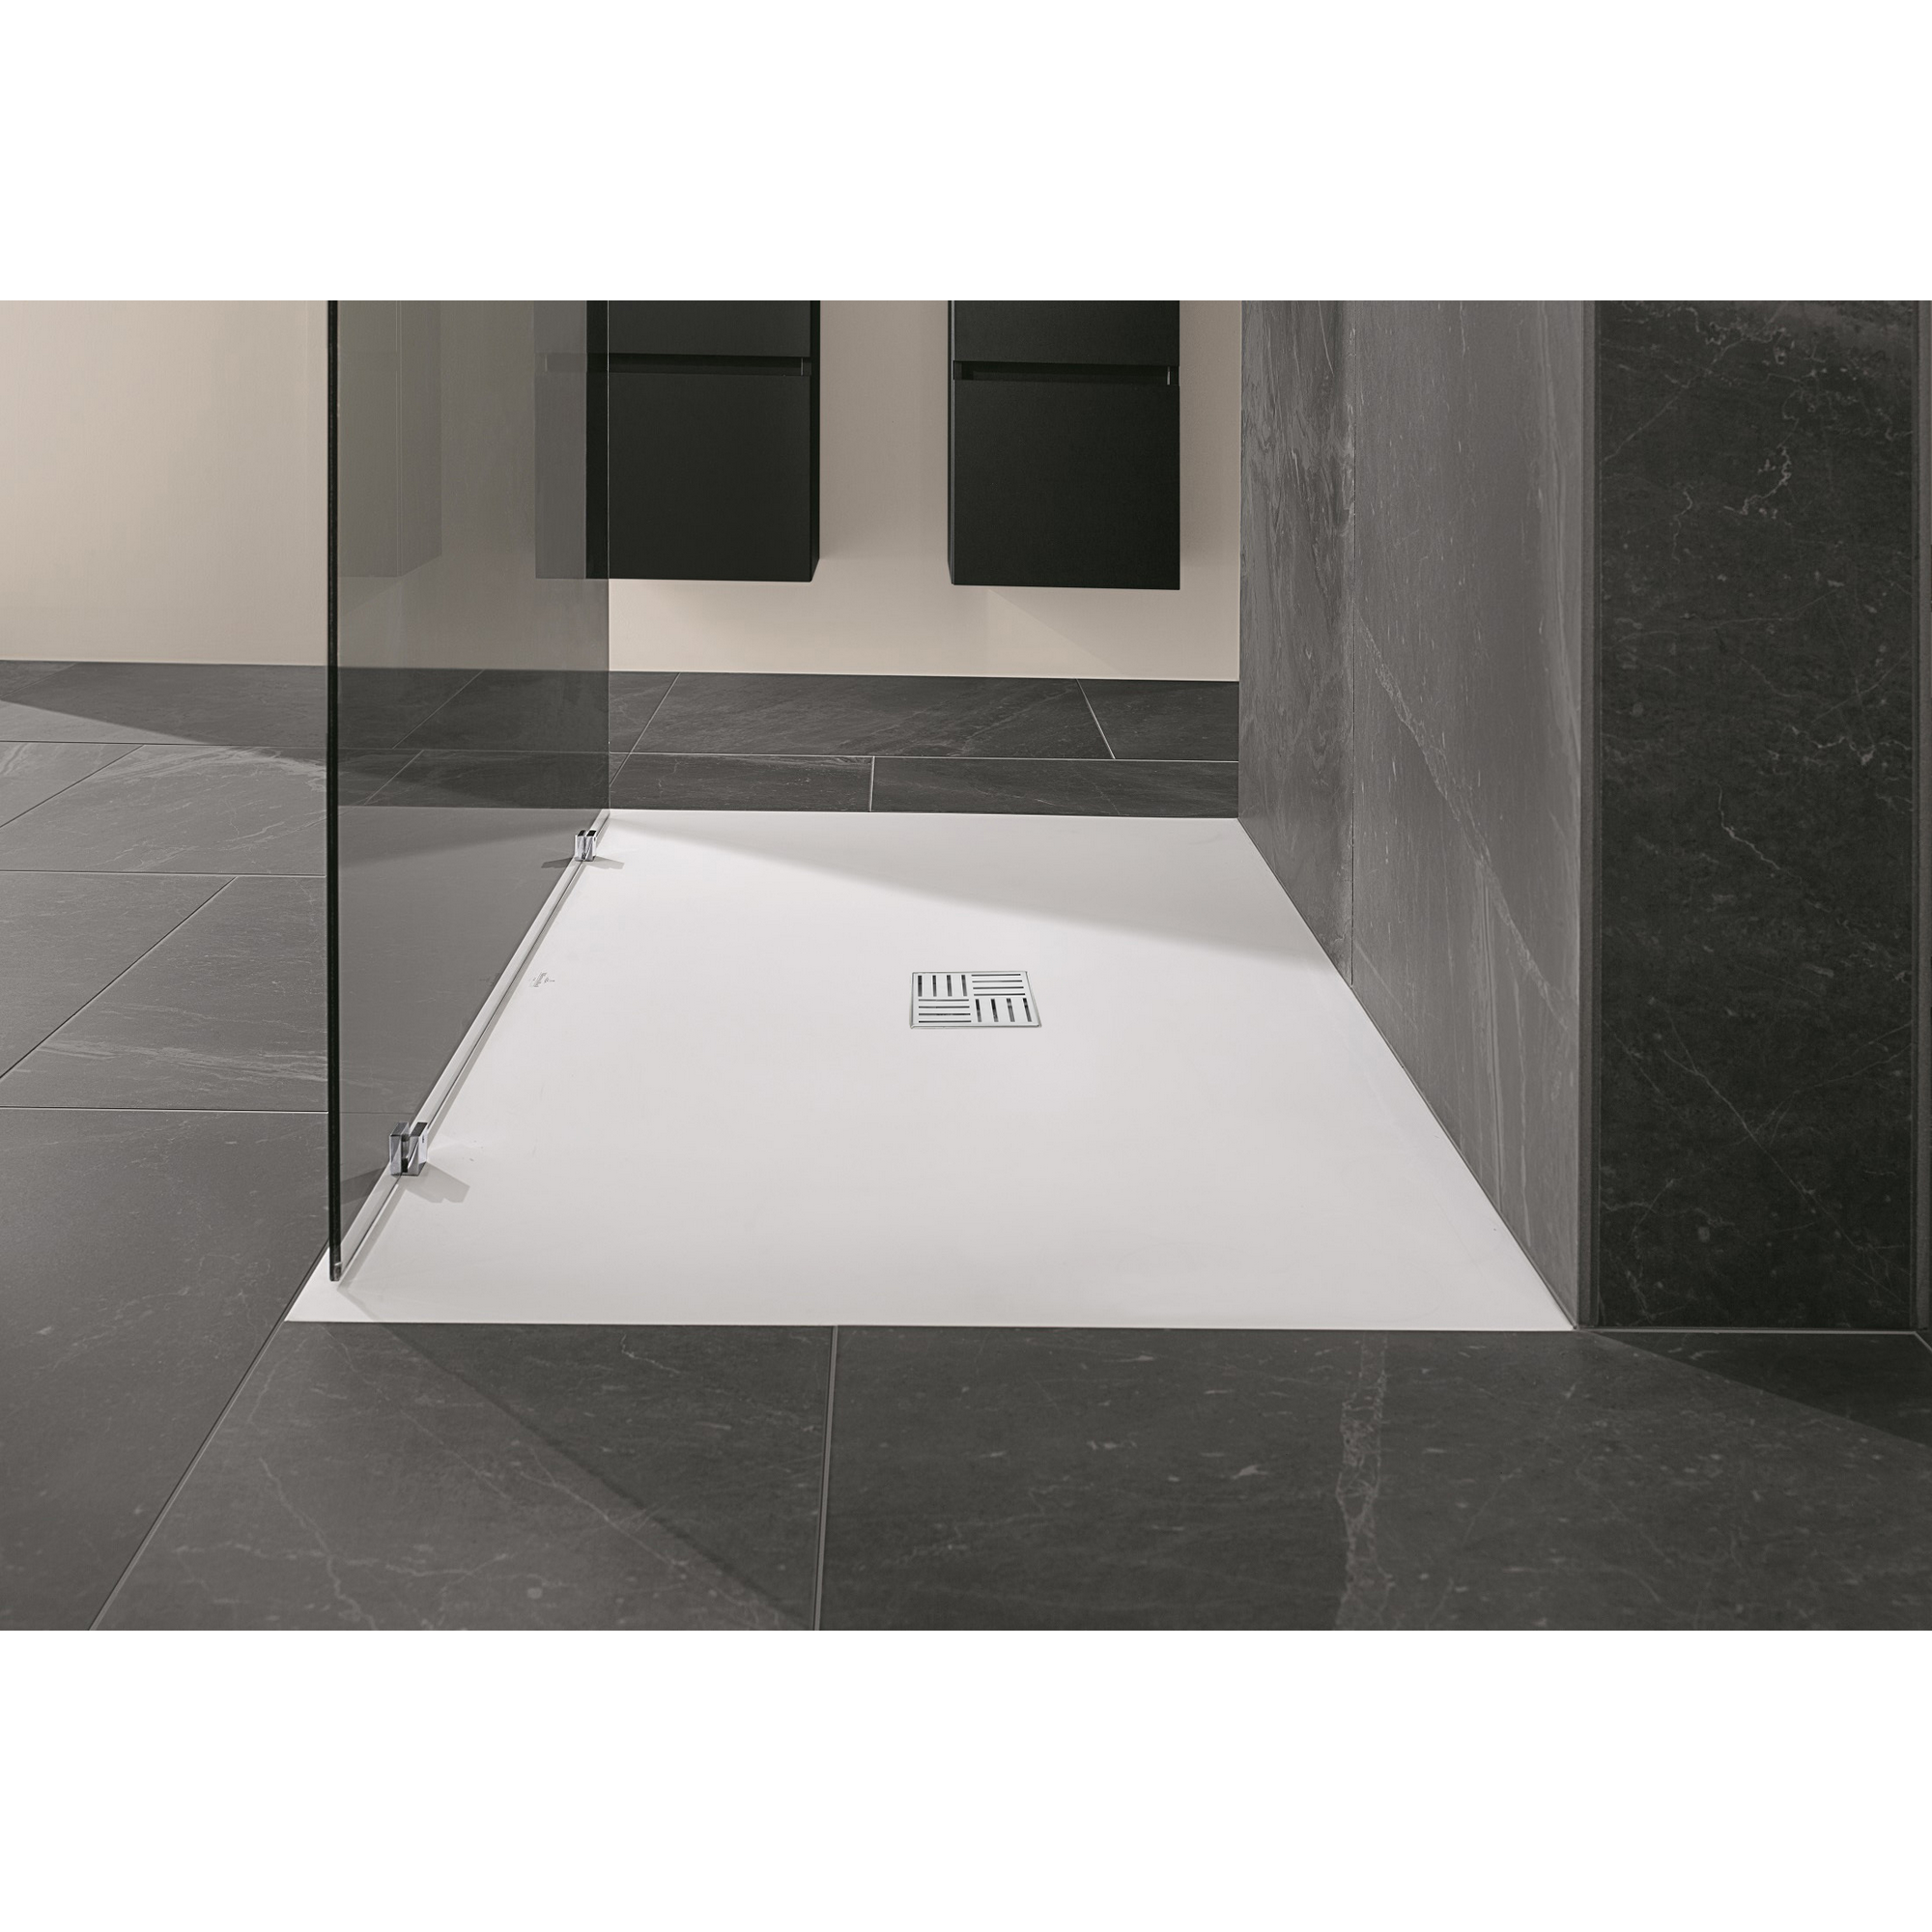 Duschrinnen-Abdeckung 'Cover' Edelstahl 15 x 15 cm, 3-reihig geschlitzt + product picture